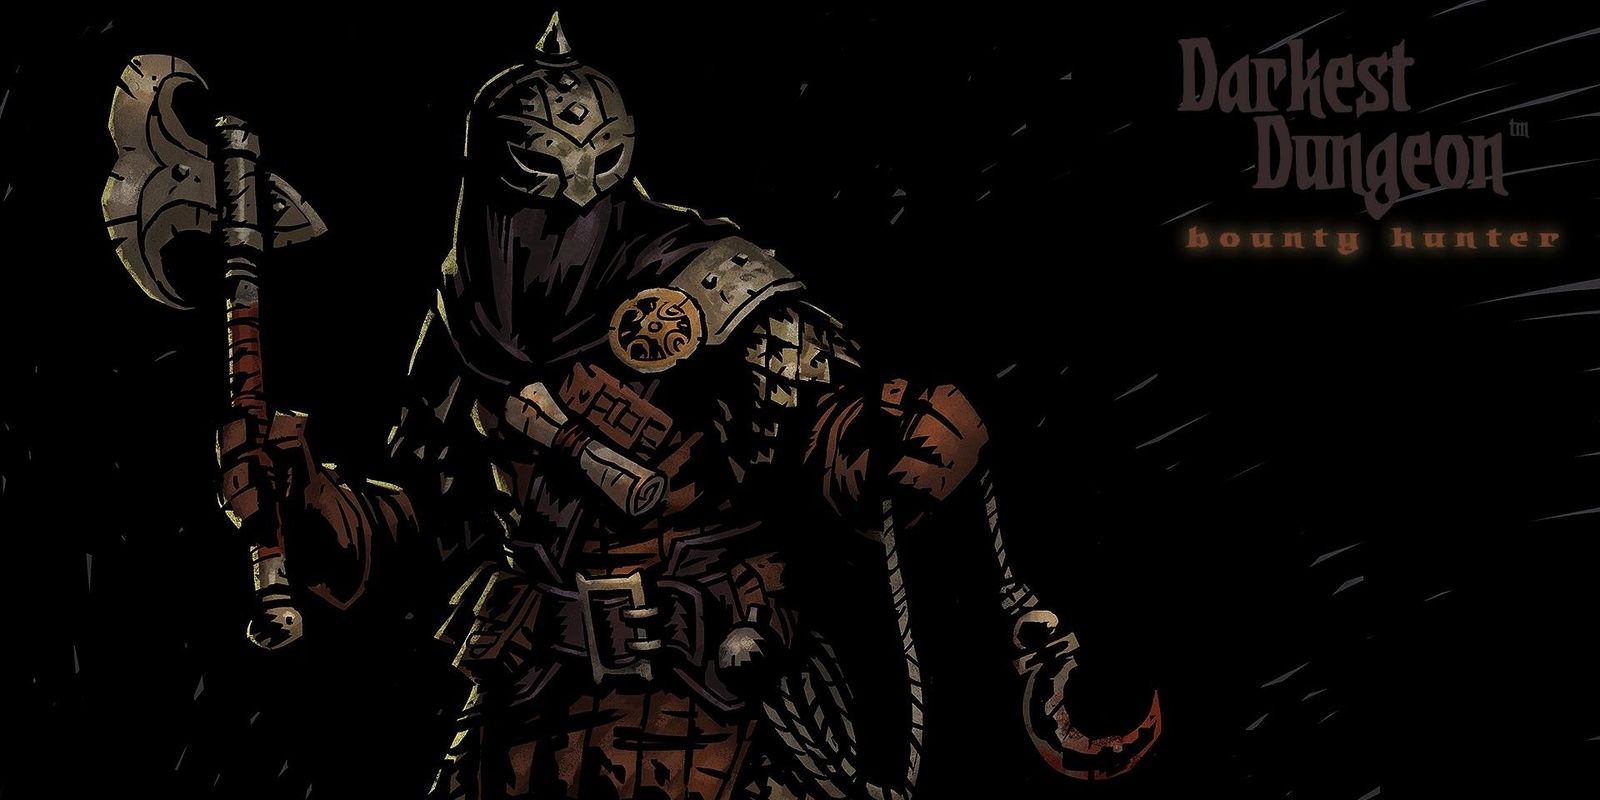 Red Hook Studio's official wallpaper for Darkest Dungeon's Bounty Hunter